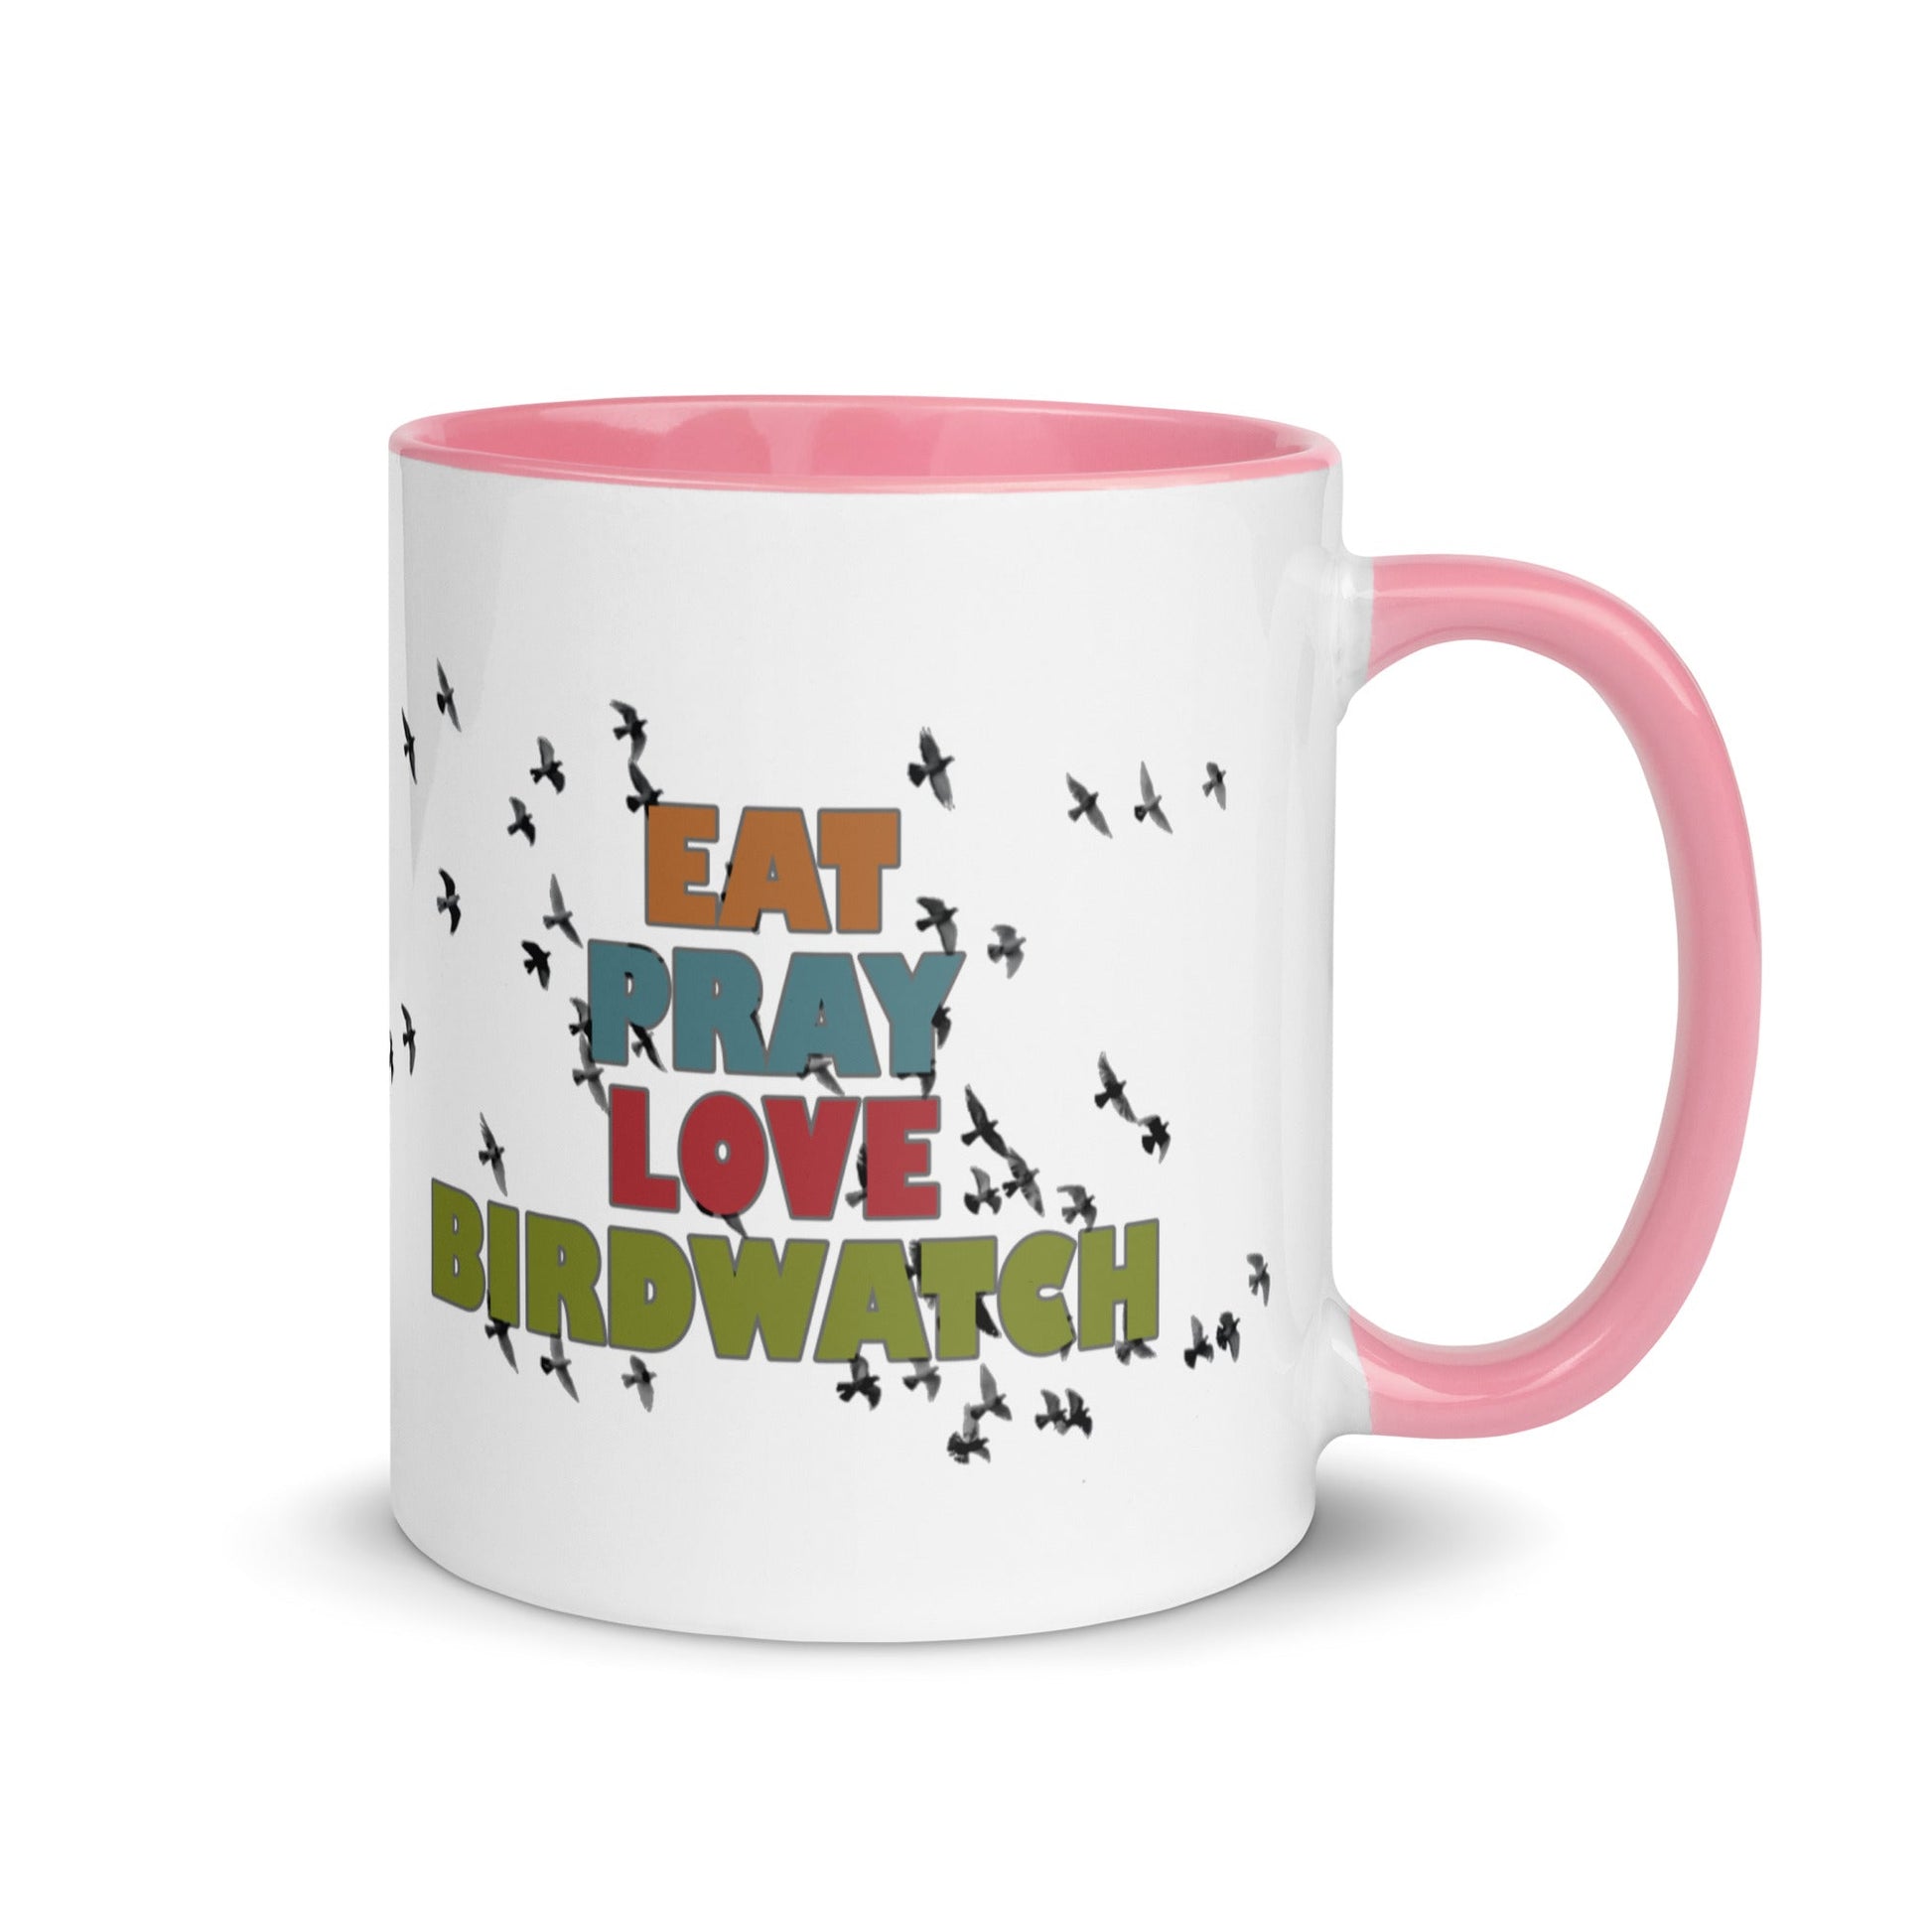 Eat Pray Love Birdwatch Mug with Color Inside